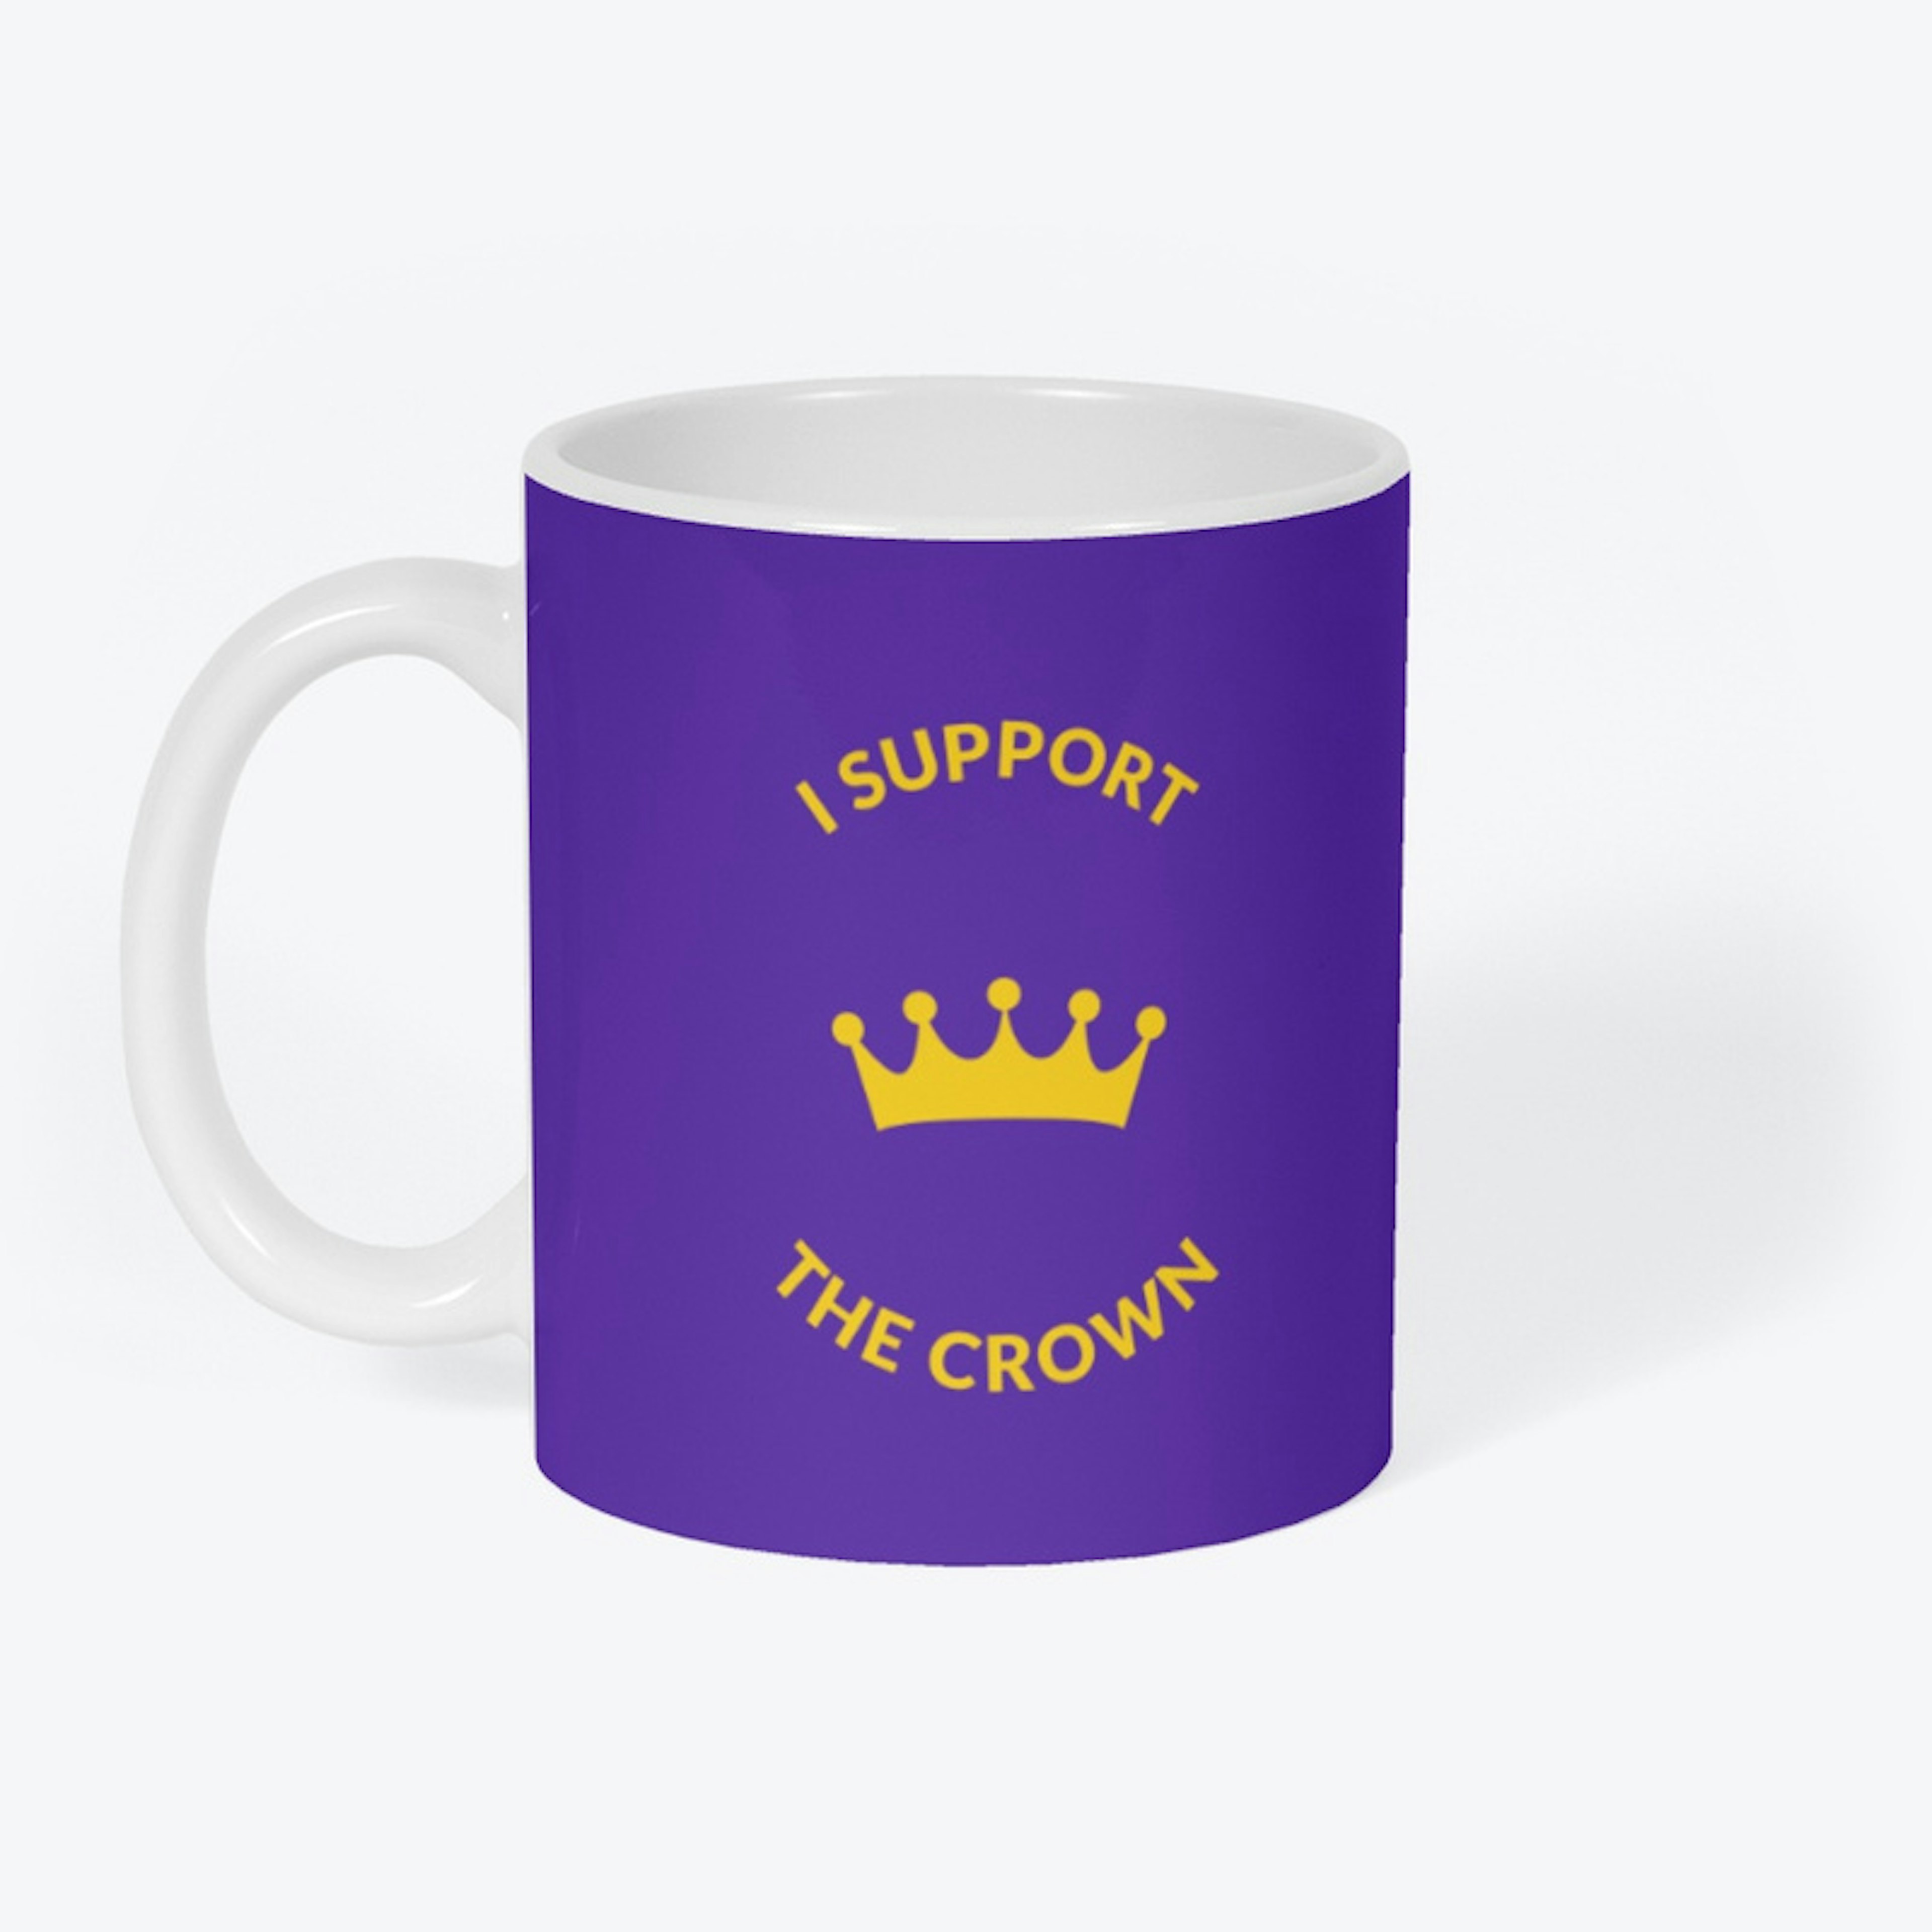 I Support The Crown mug g